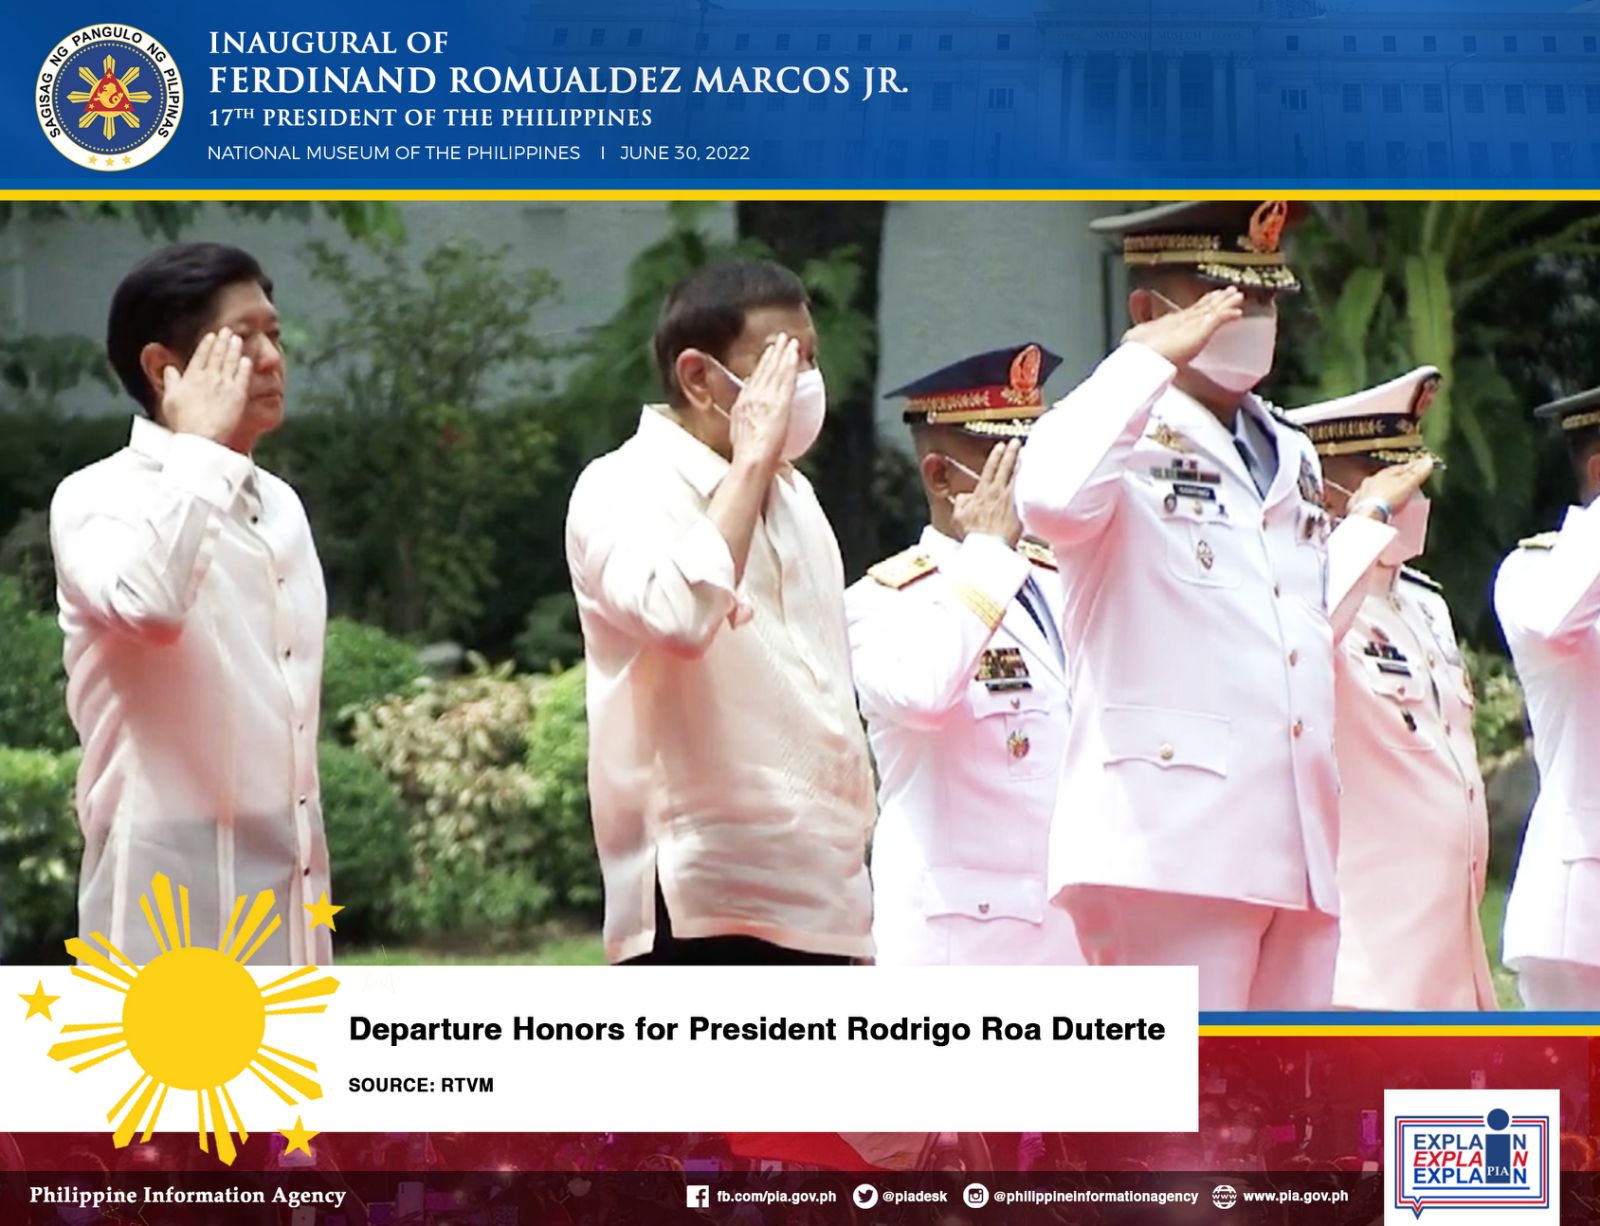 Outgoing President Rodrigo Roa Duterte receives his departure honors